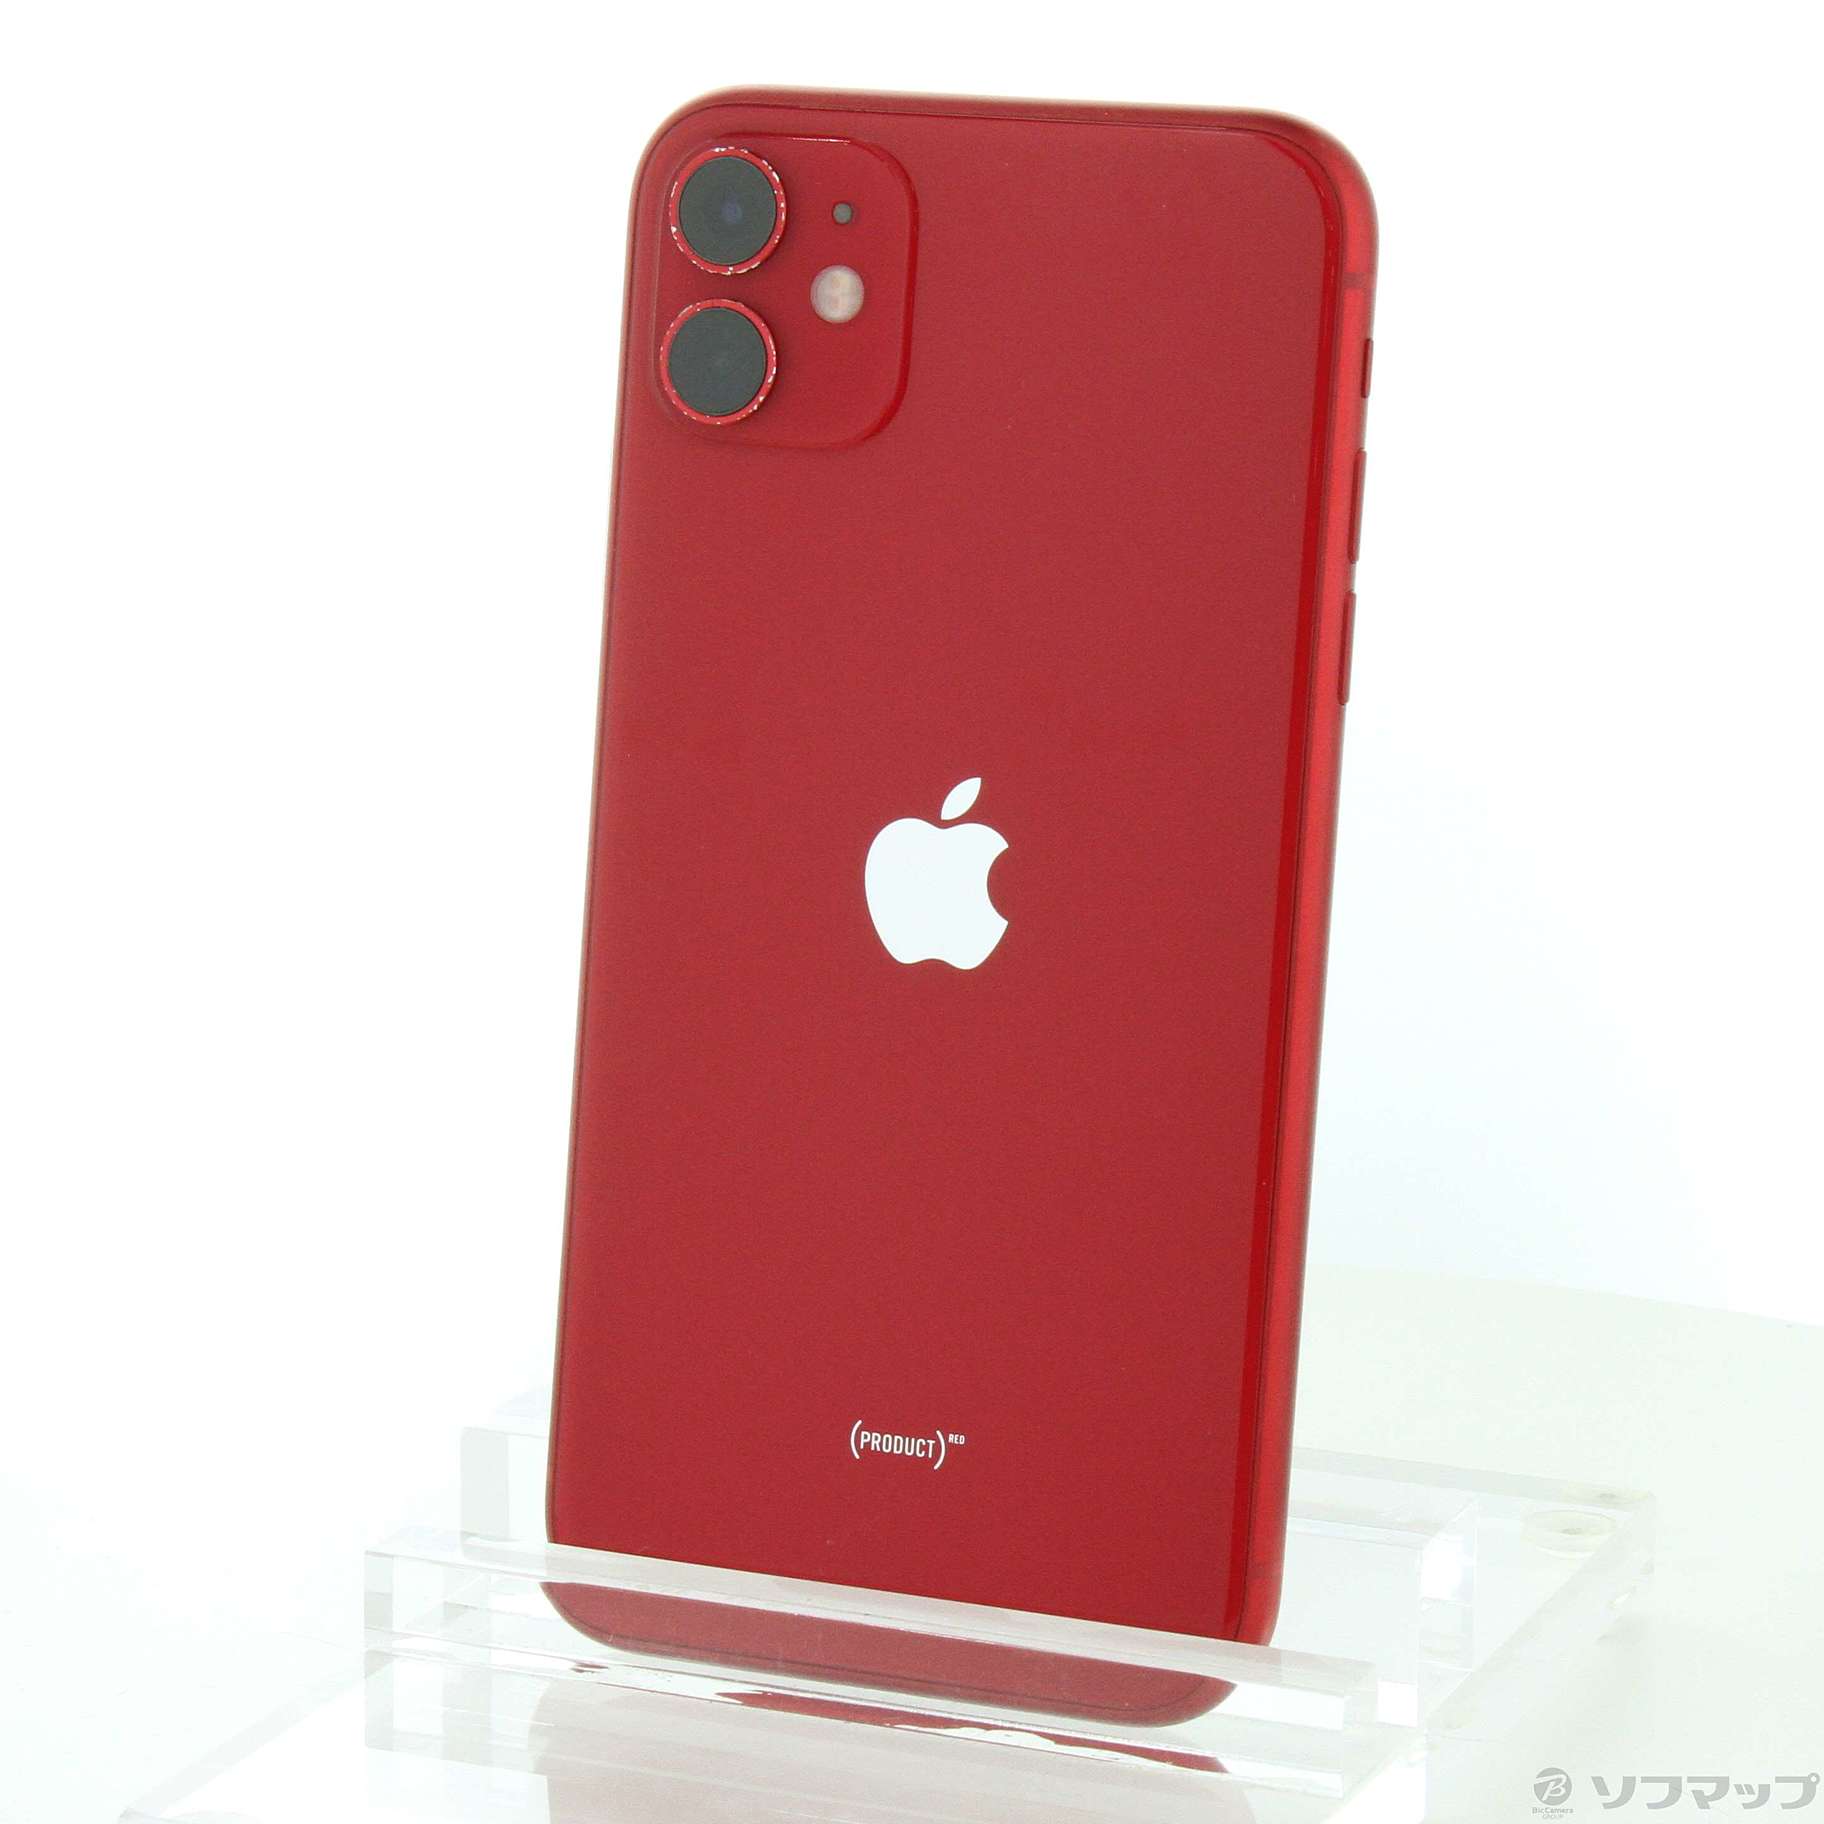 SIMフリーiPhone11 64GB product red